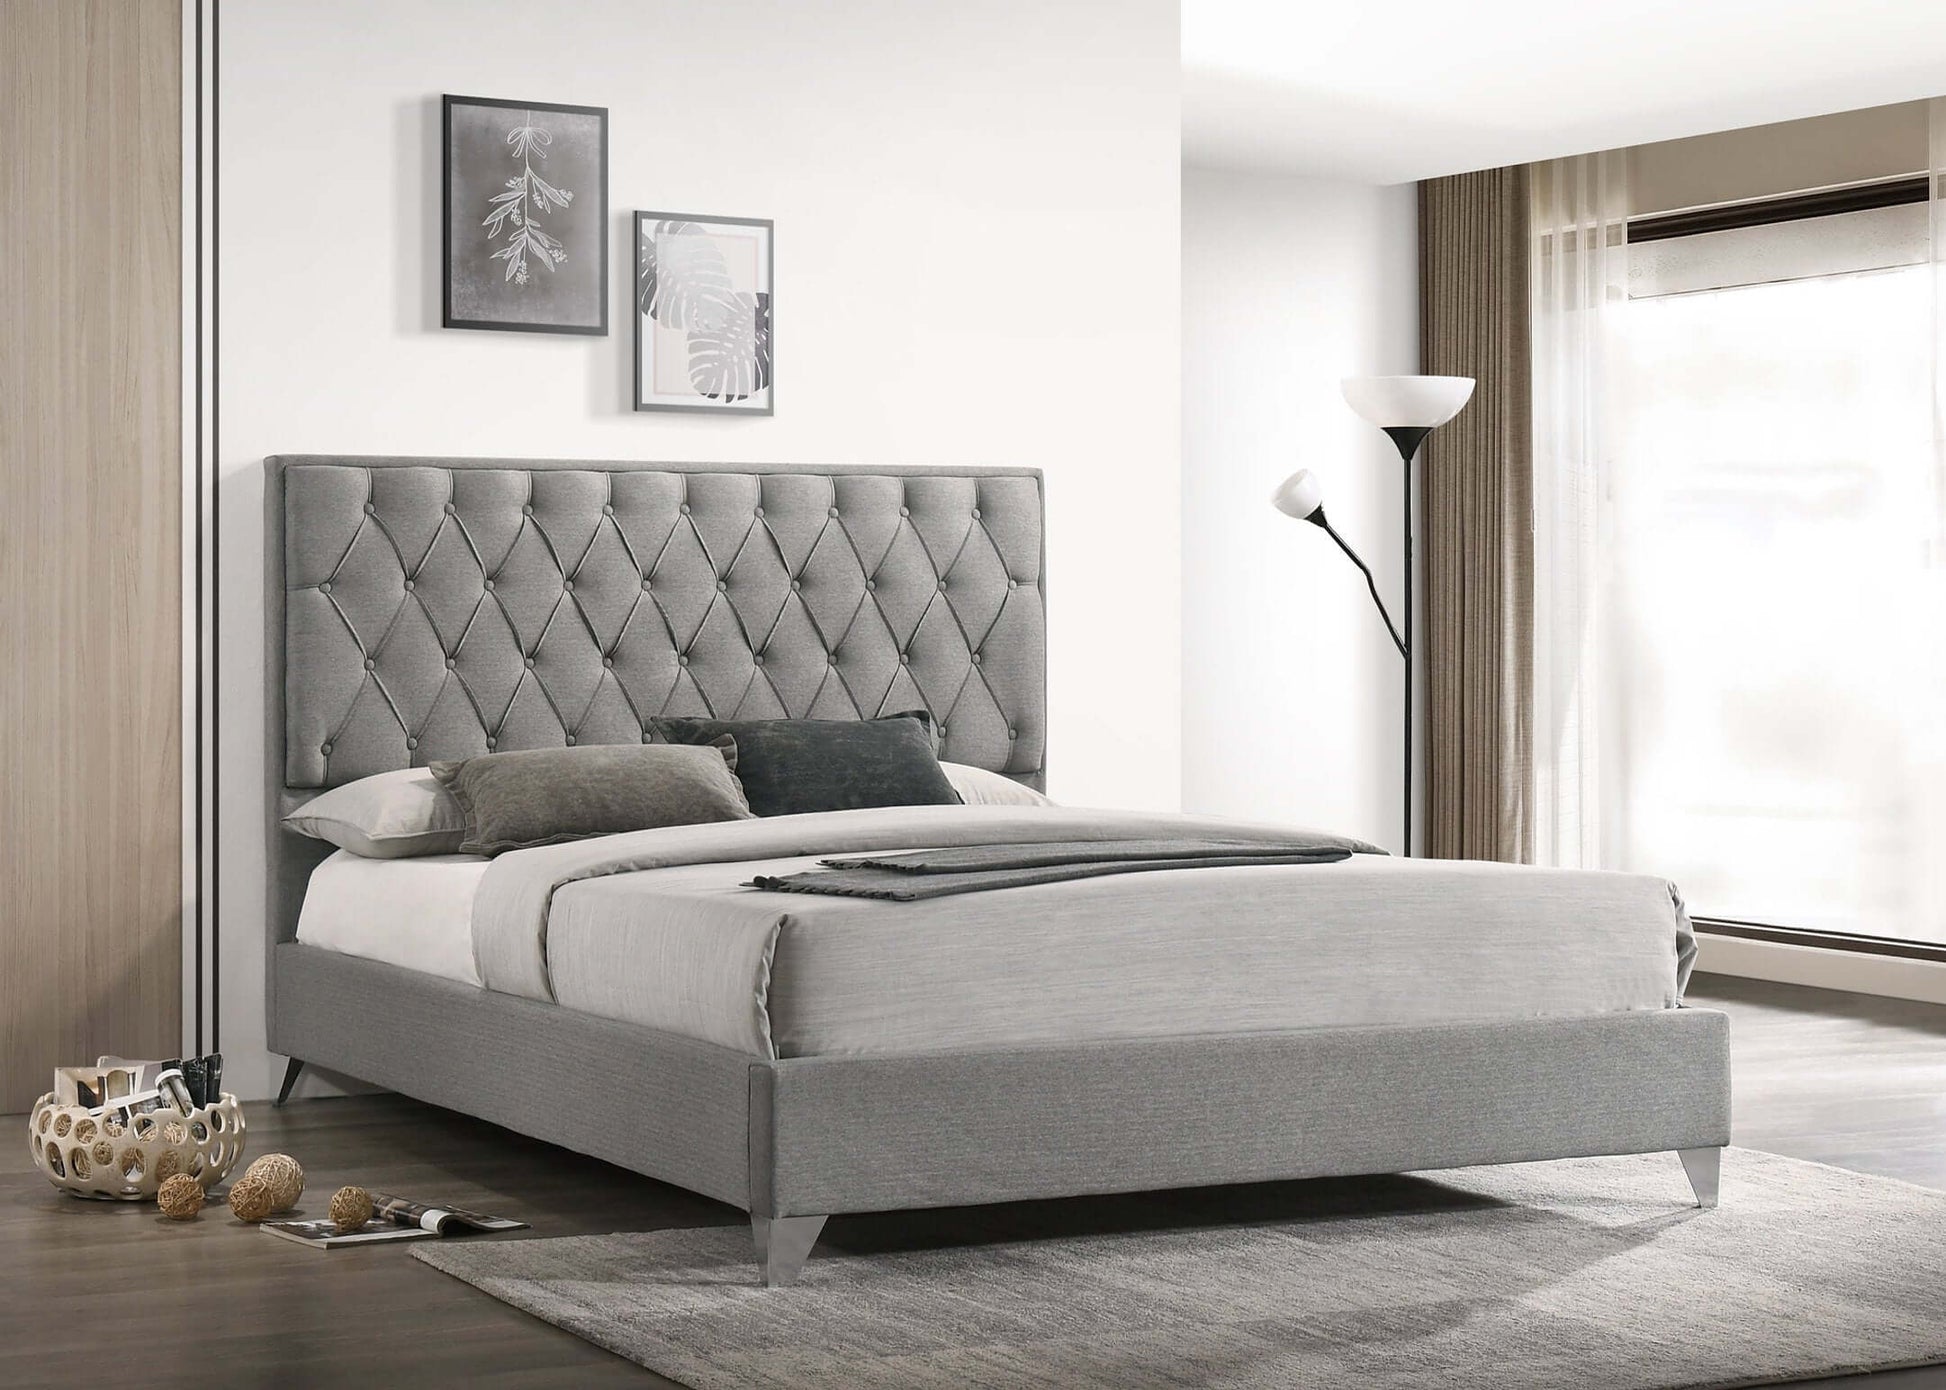 International Furniture Distribution Centre - Grey Fabric or PU Leather Upholstered Platform Bed - IF 5225 - Q